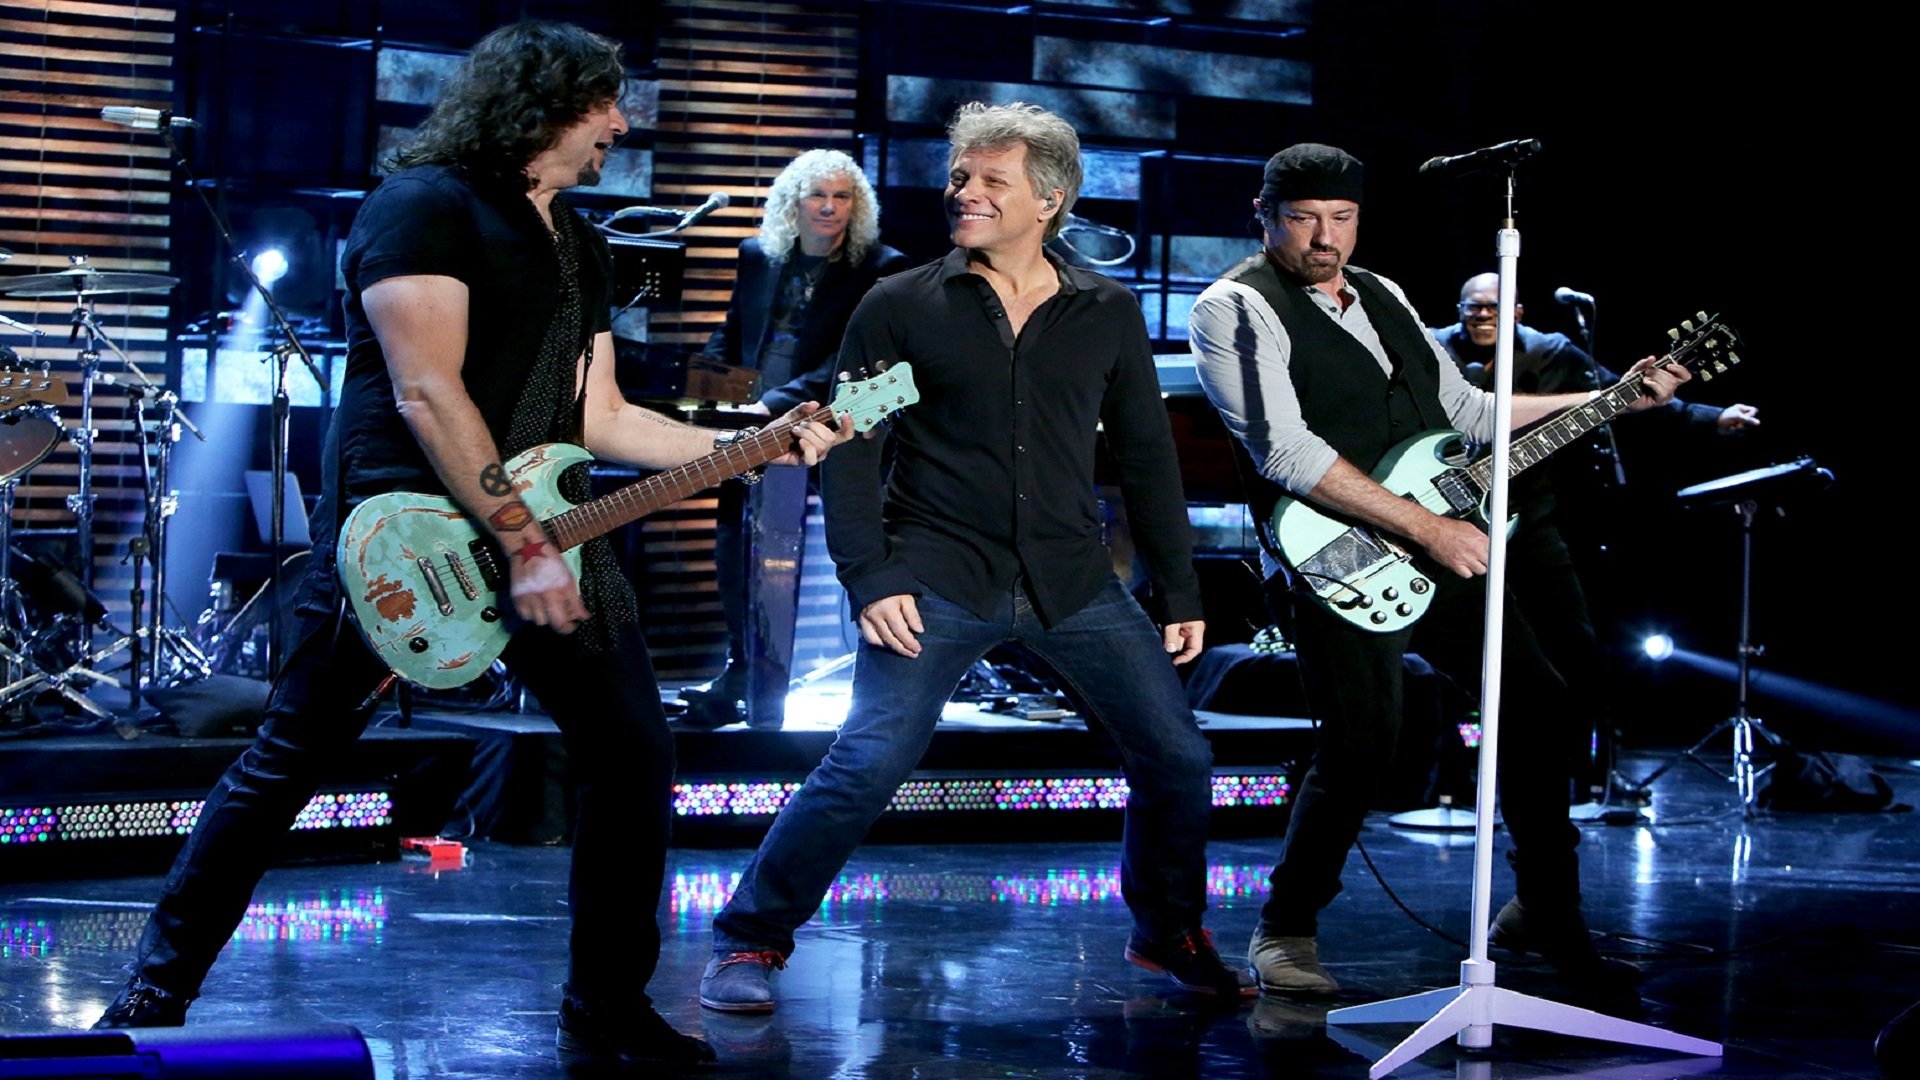 Bon jovi концерт видео. Бон Джови группа. Бон Джови фото группы. Bon Jovi американская рок-группа. Джон Бон Джови на концерте.